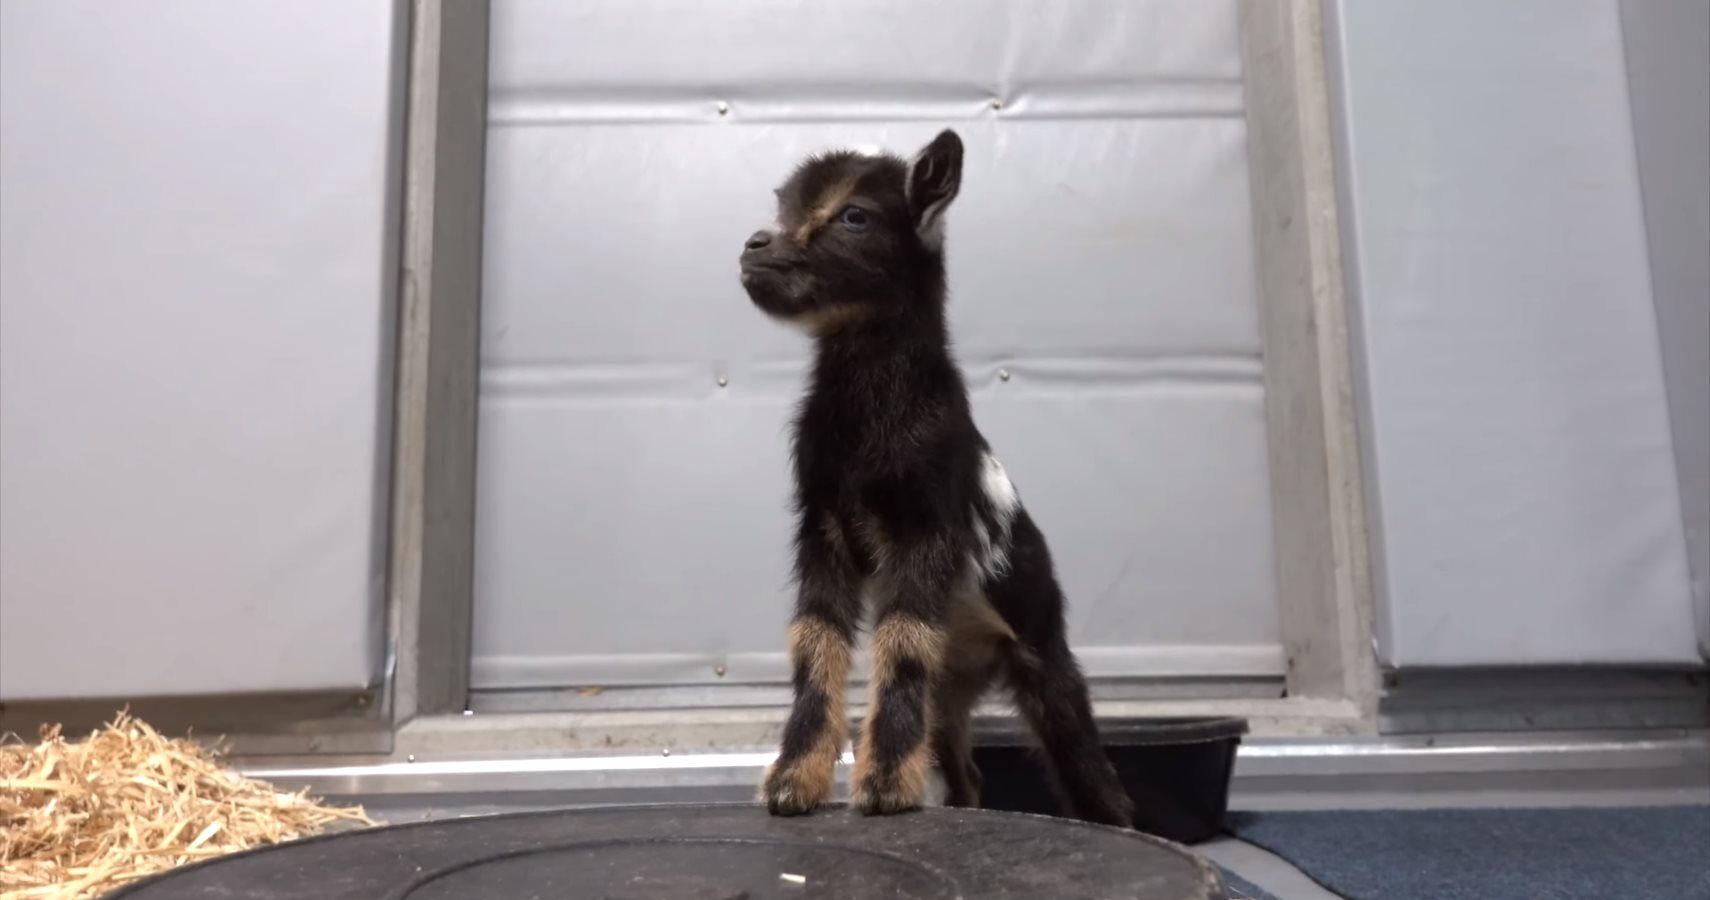 WATCH: Oregon Zoo Has A New Baby Dwarf Goat